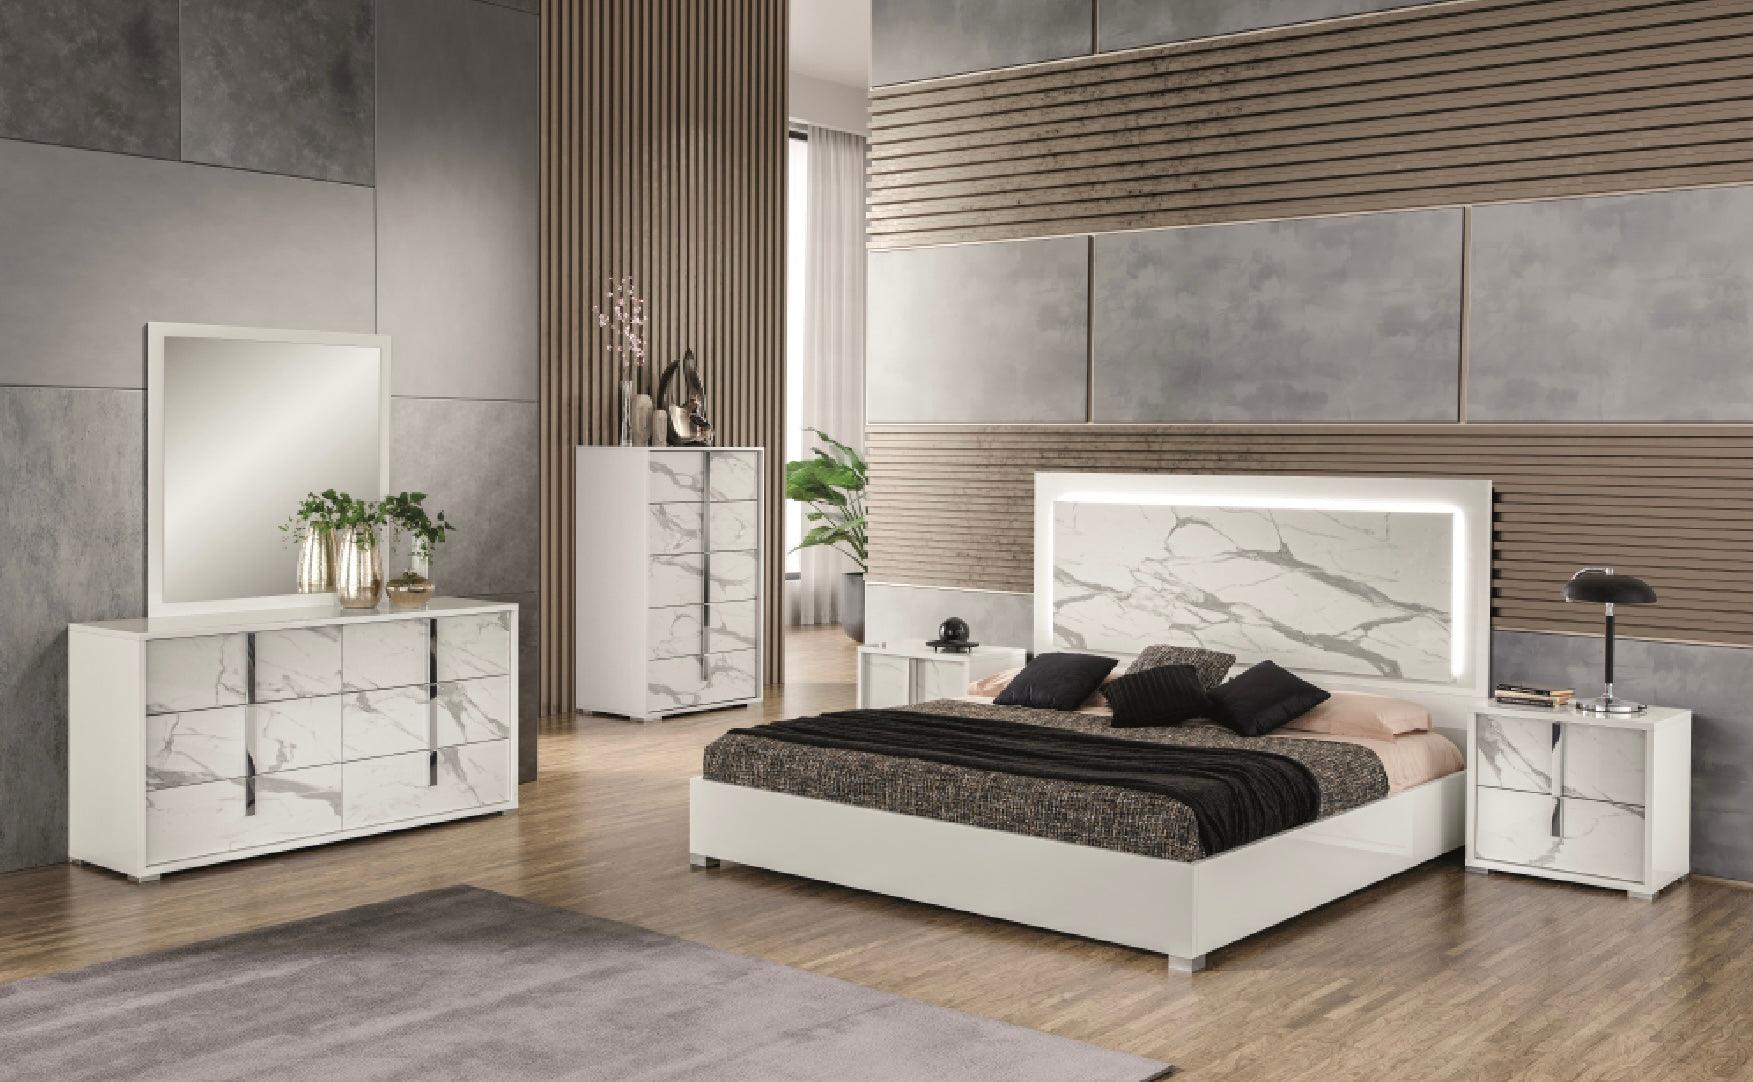 Sonic bedroom set colection - Euro Living Furniture